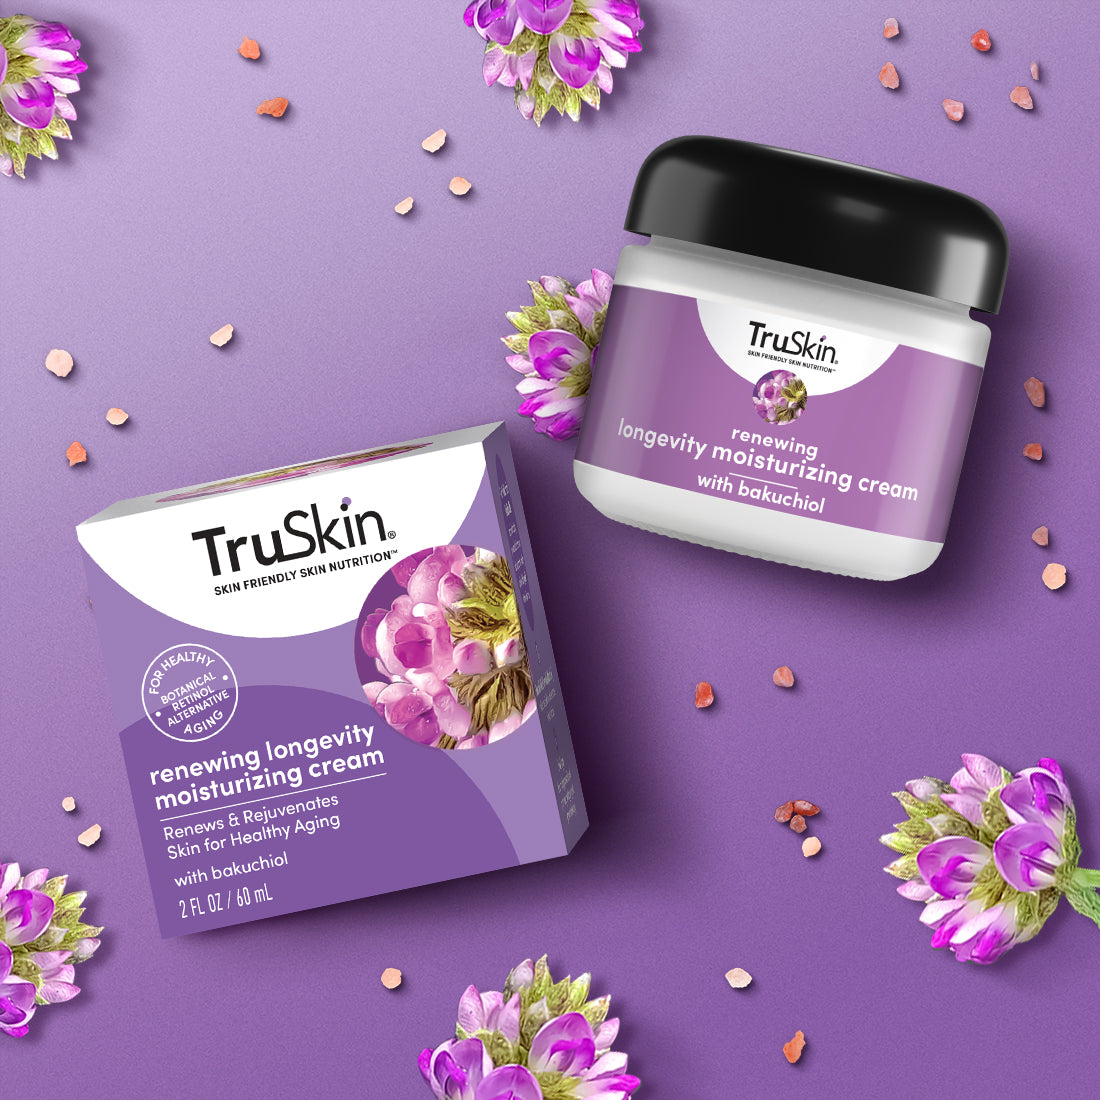 NEW TruSkin Renewing Longevity Moisturizing Cream